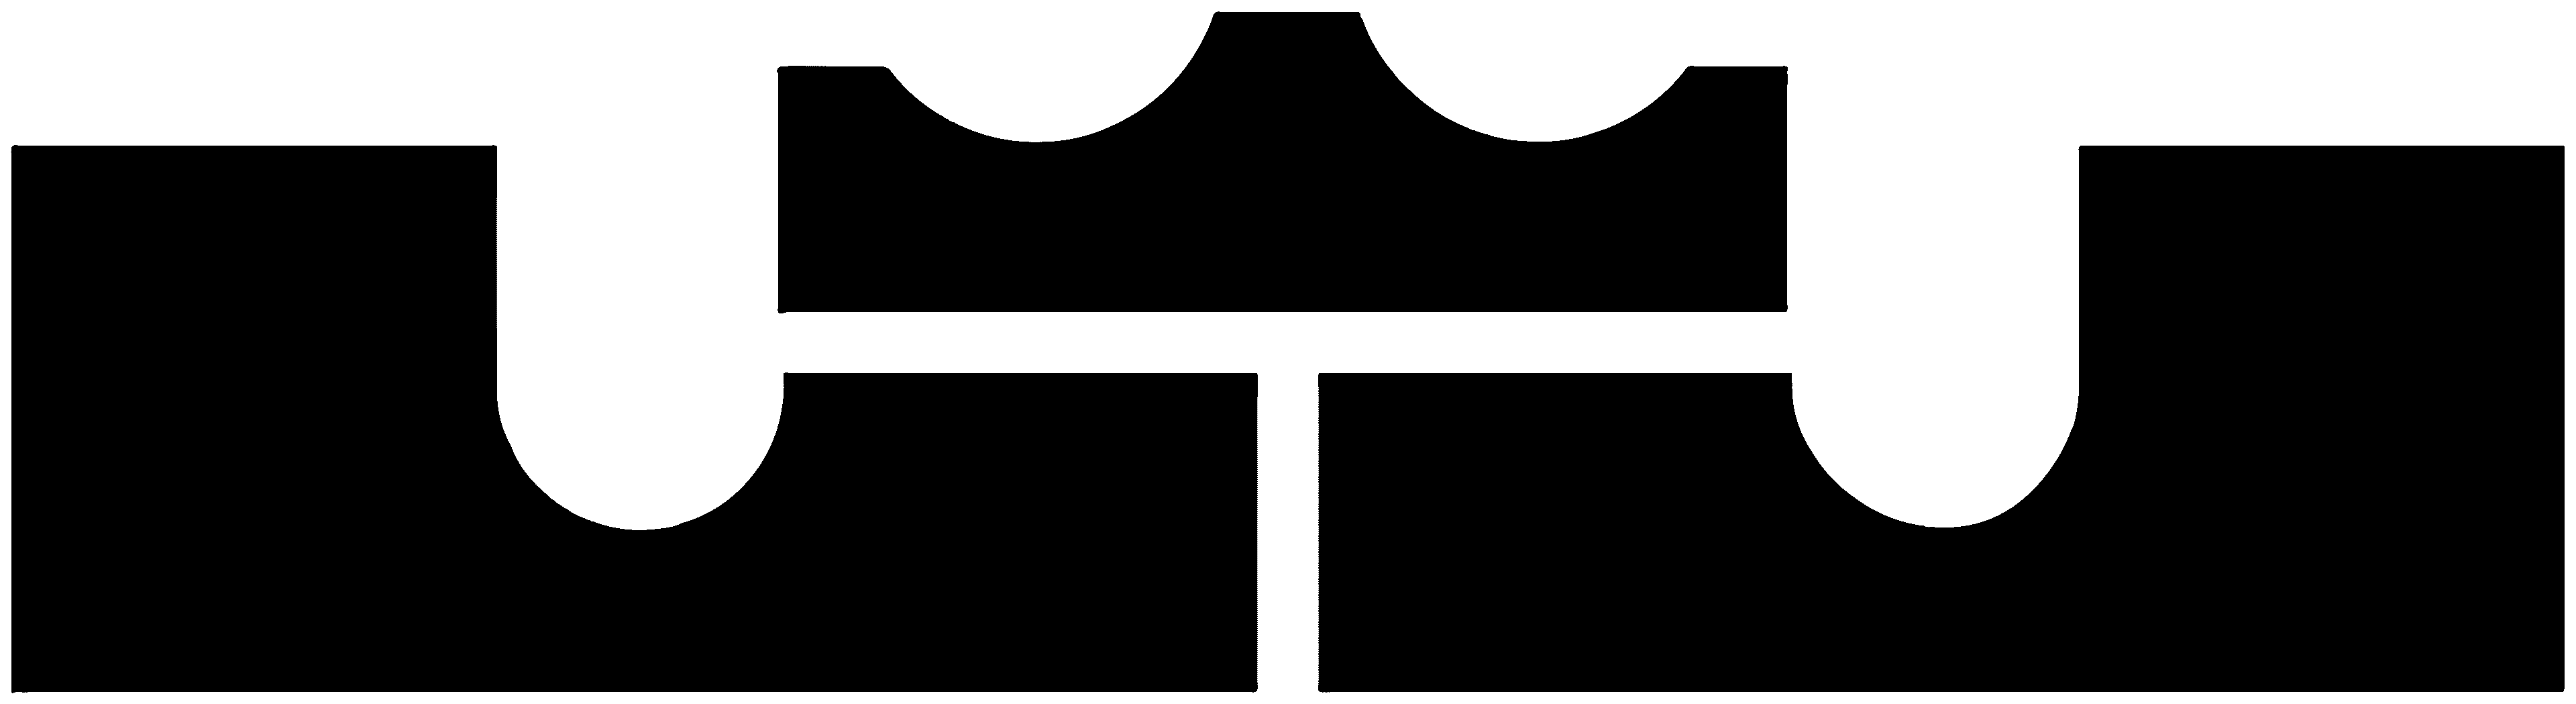 Lebron James' logo